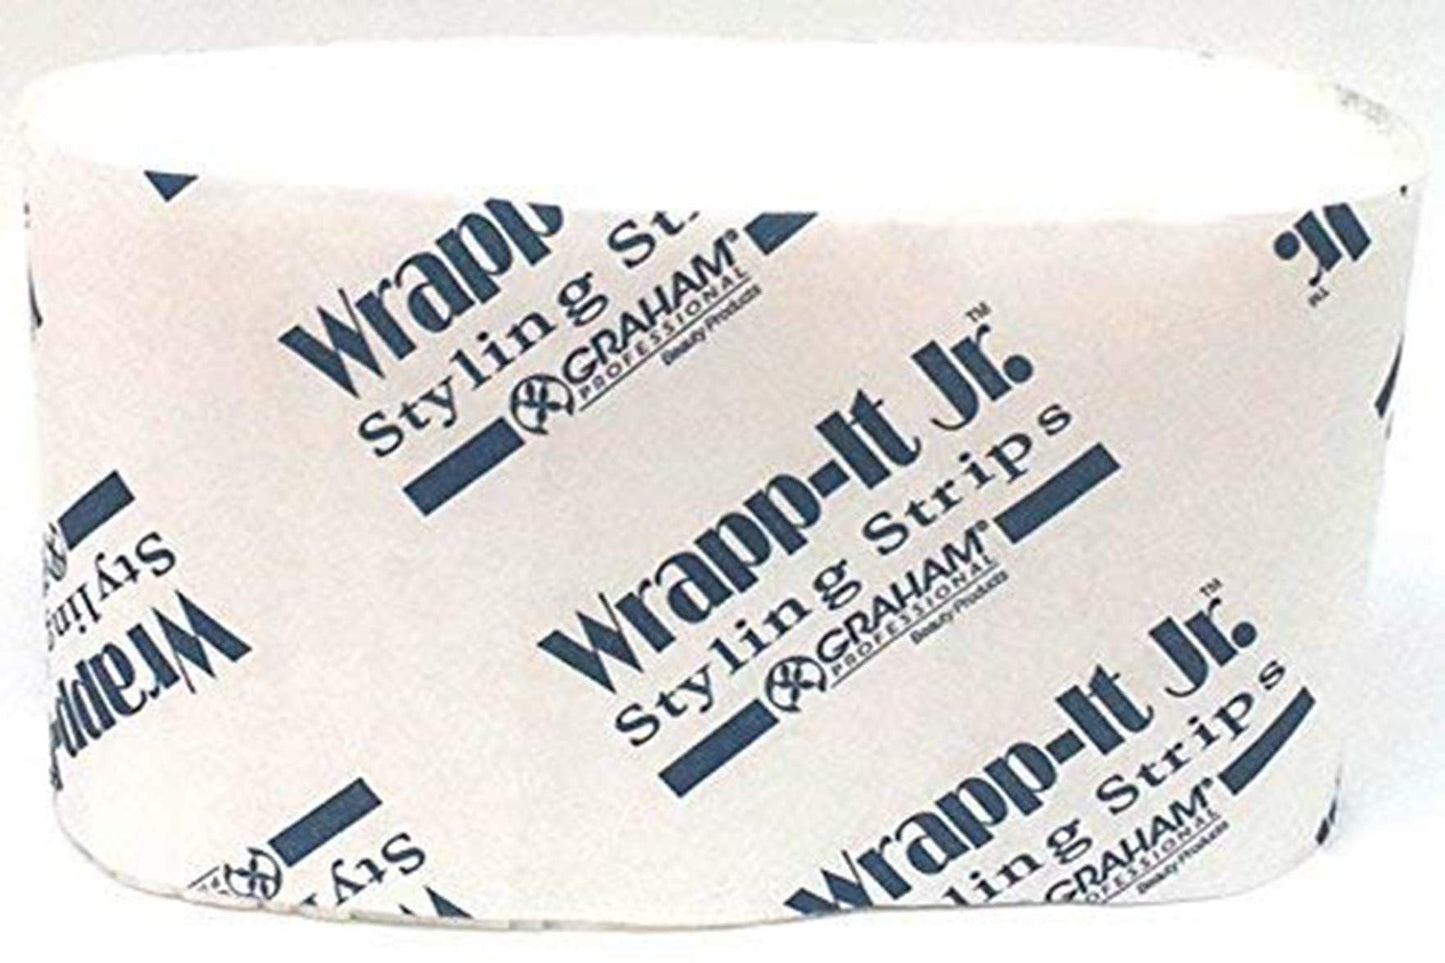 Wrapp-It Jr White Styling Strips